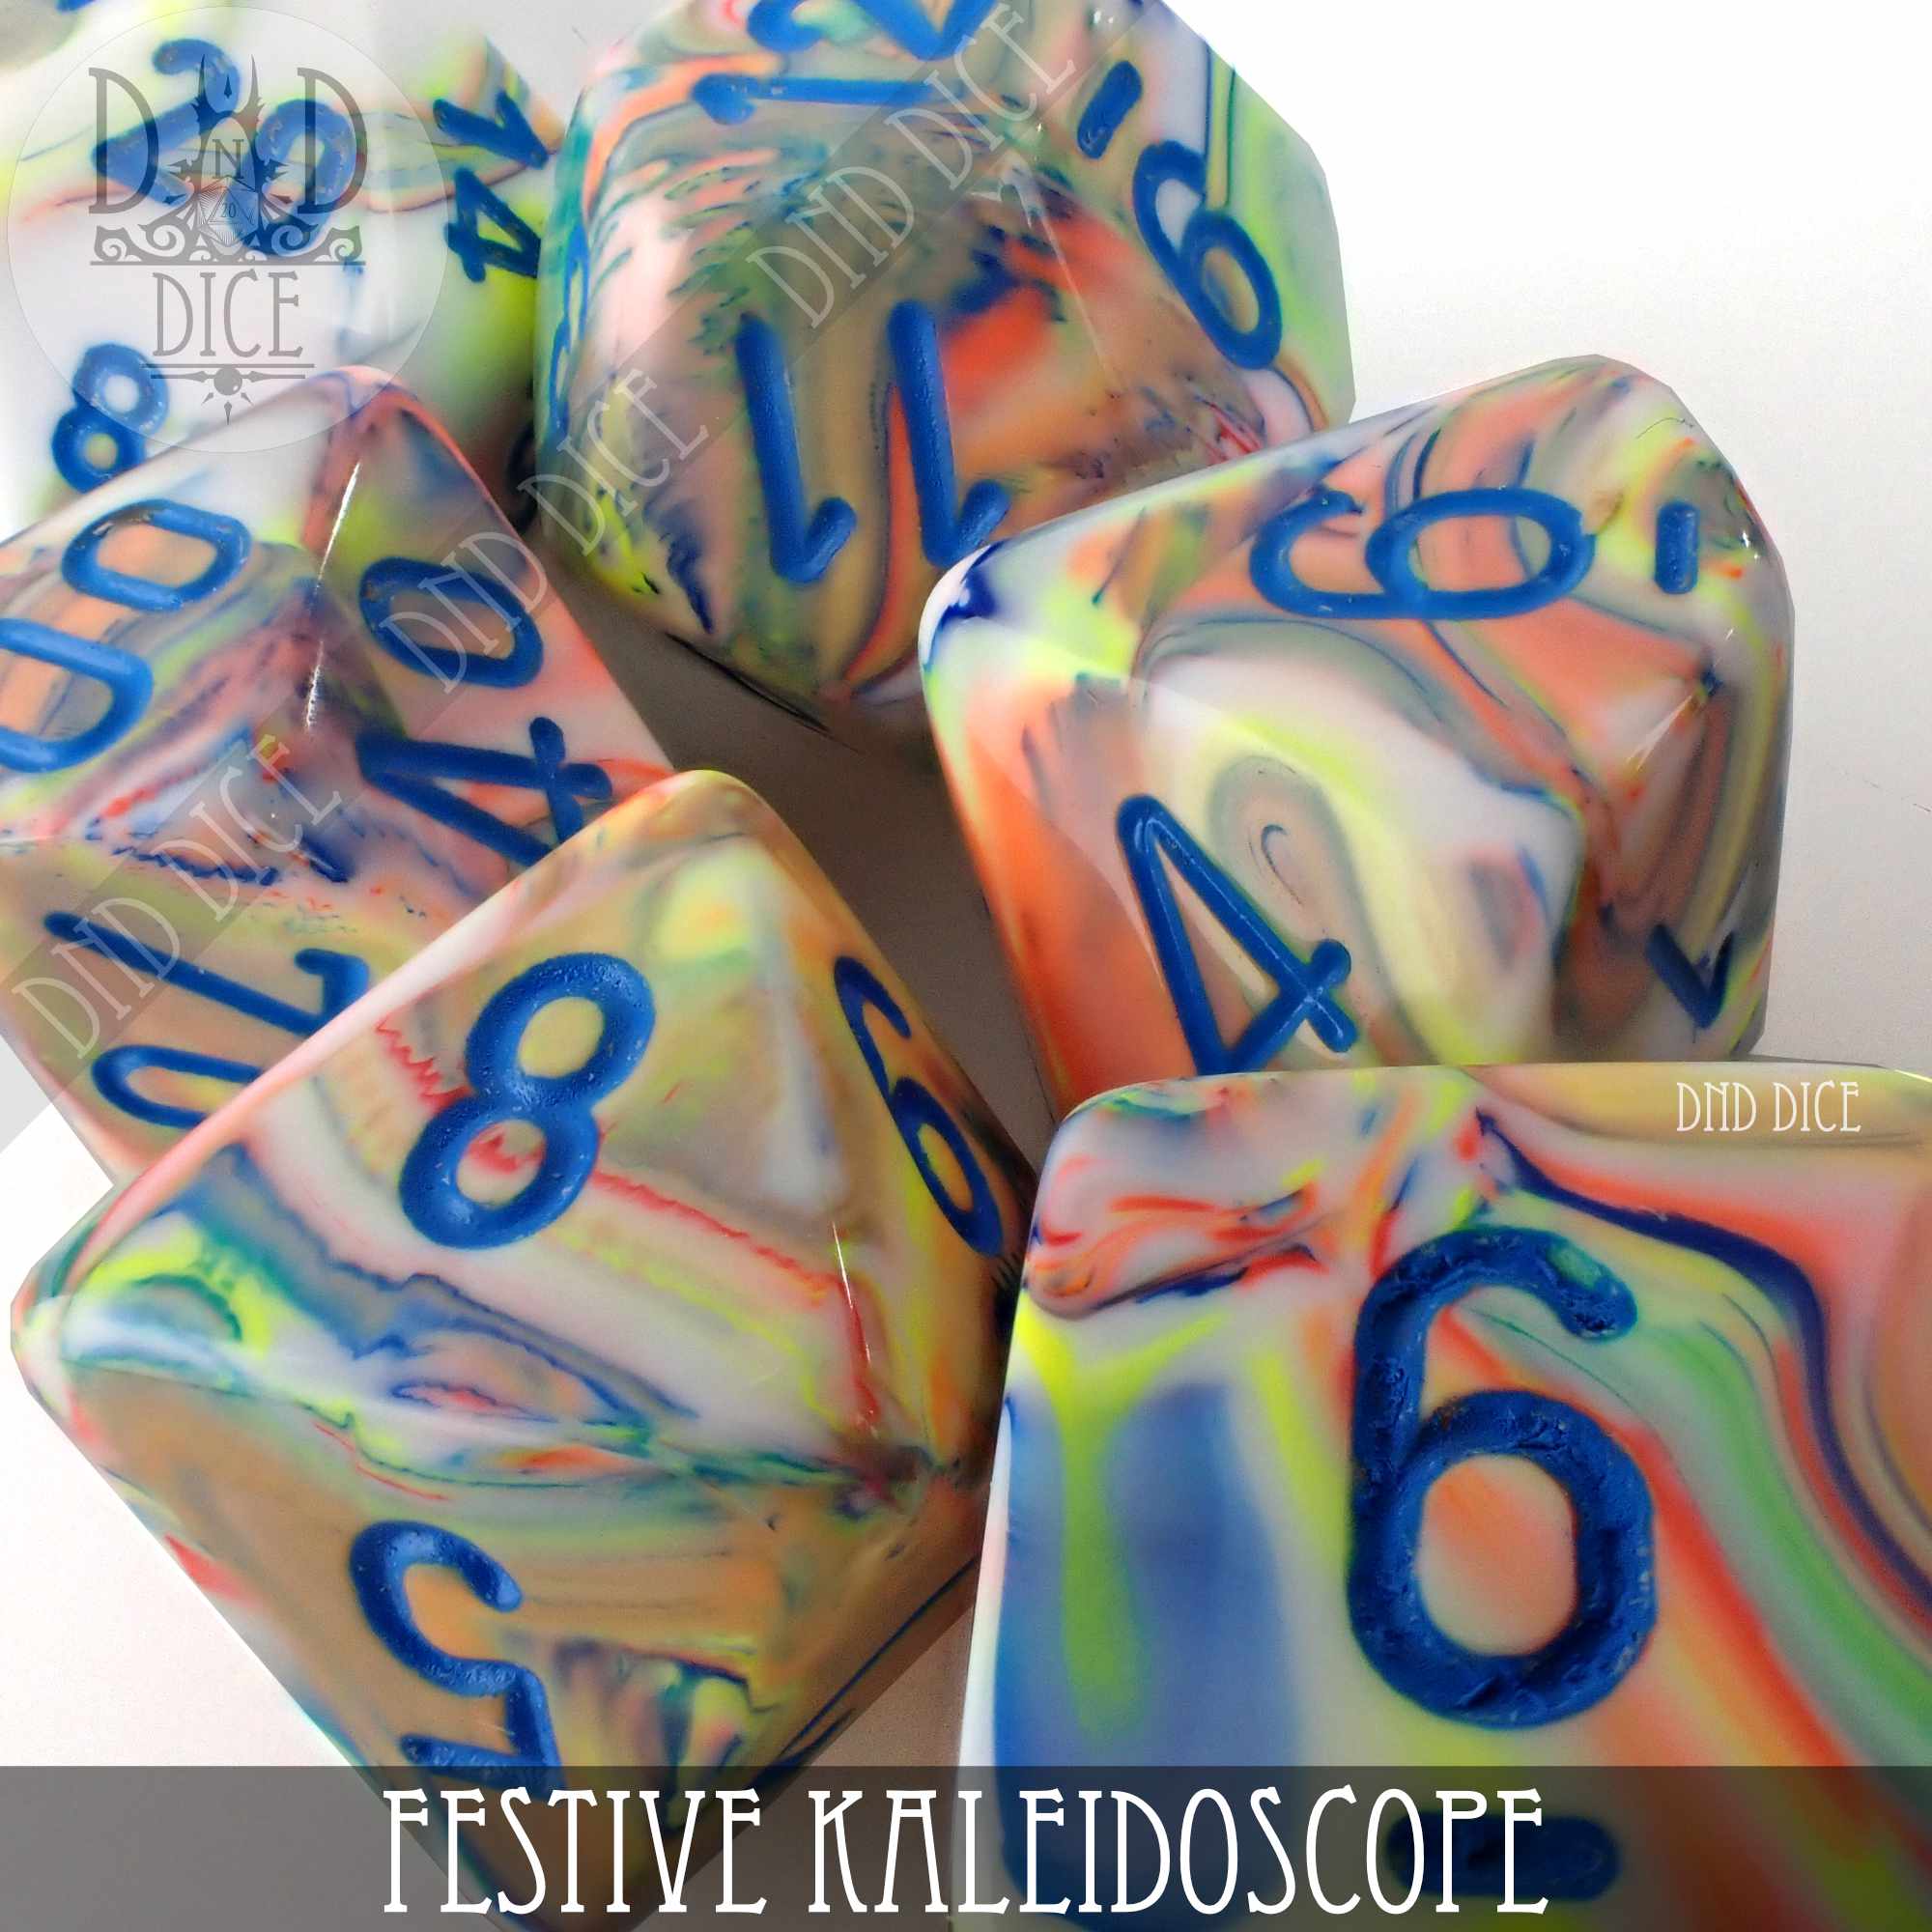 Festive Kaleidoscope 8 Dice Set (Lab 5)